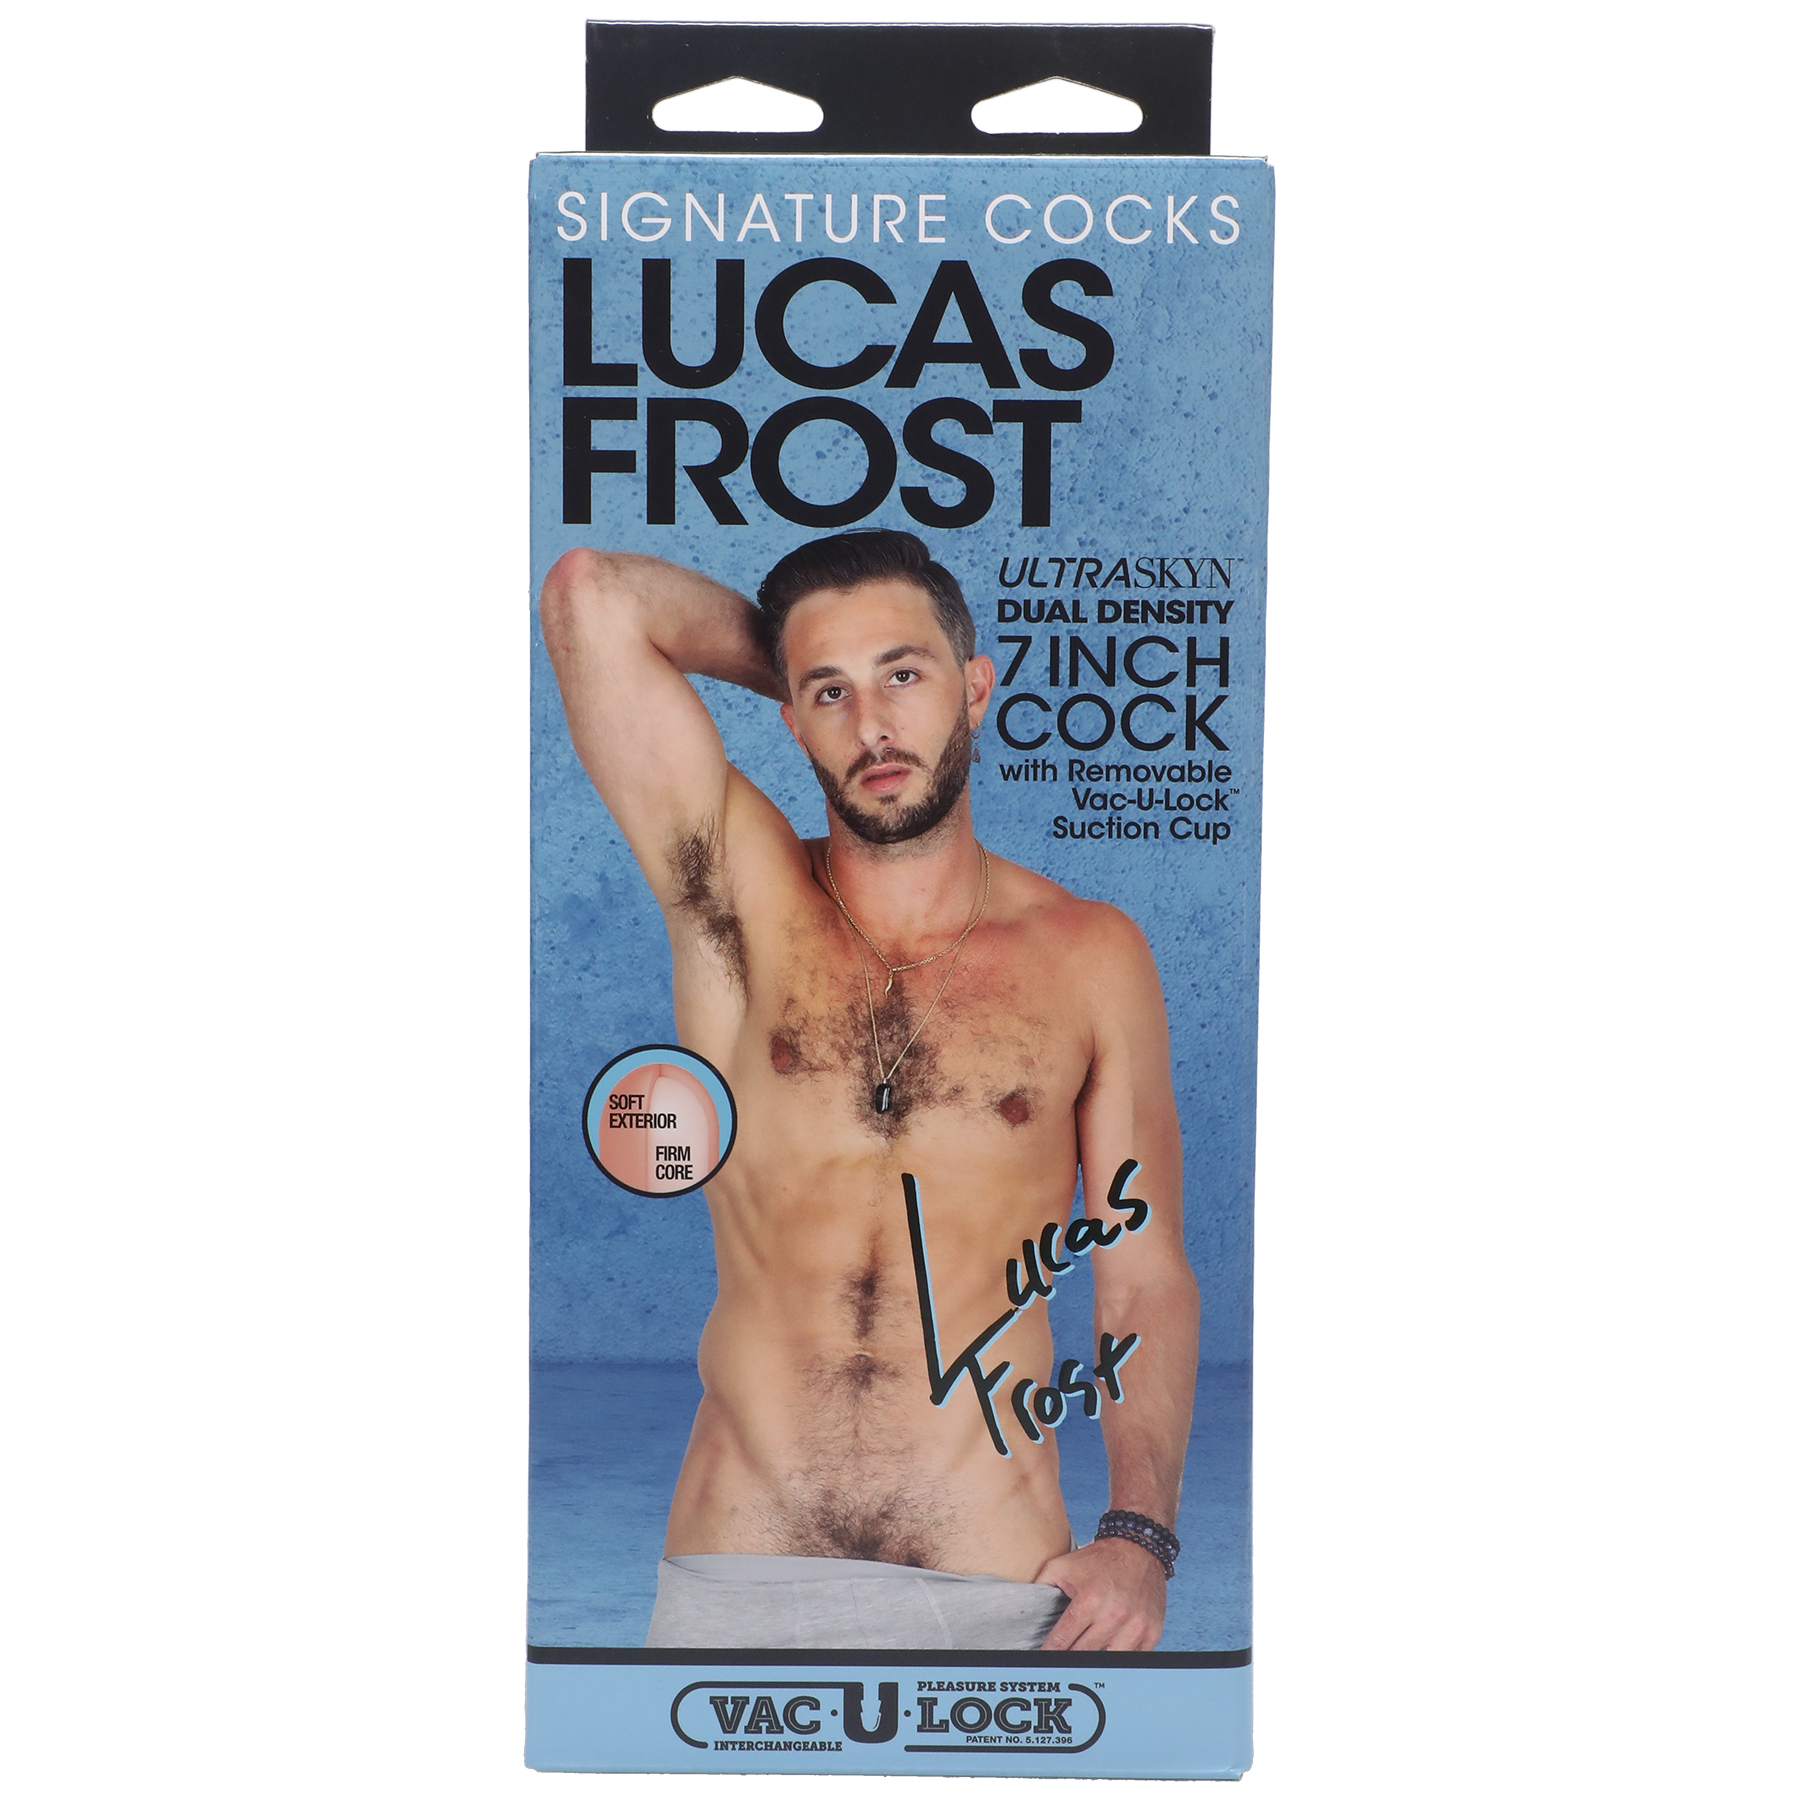 Signature Cocks Ultraskyn Lucas Frost Dildo